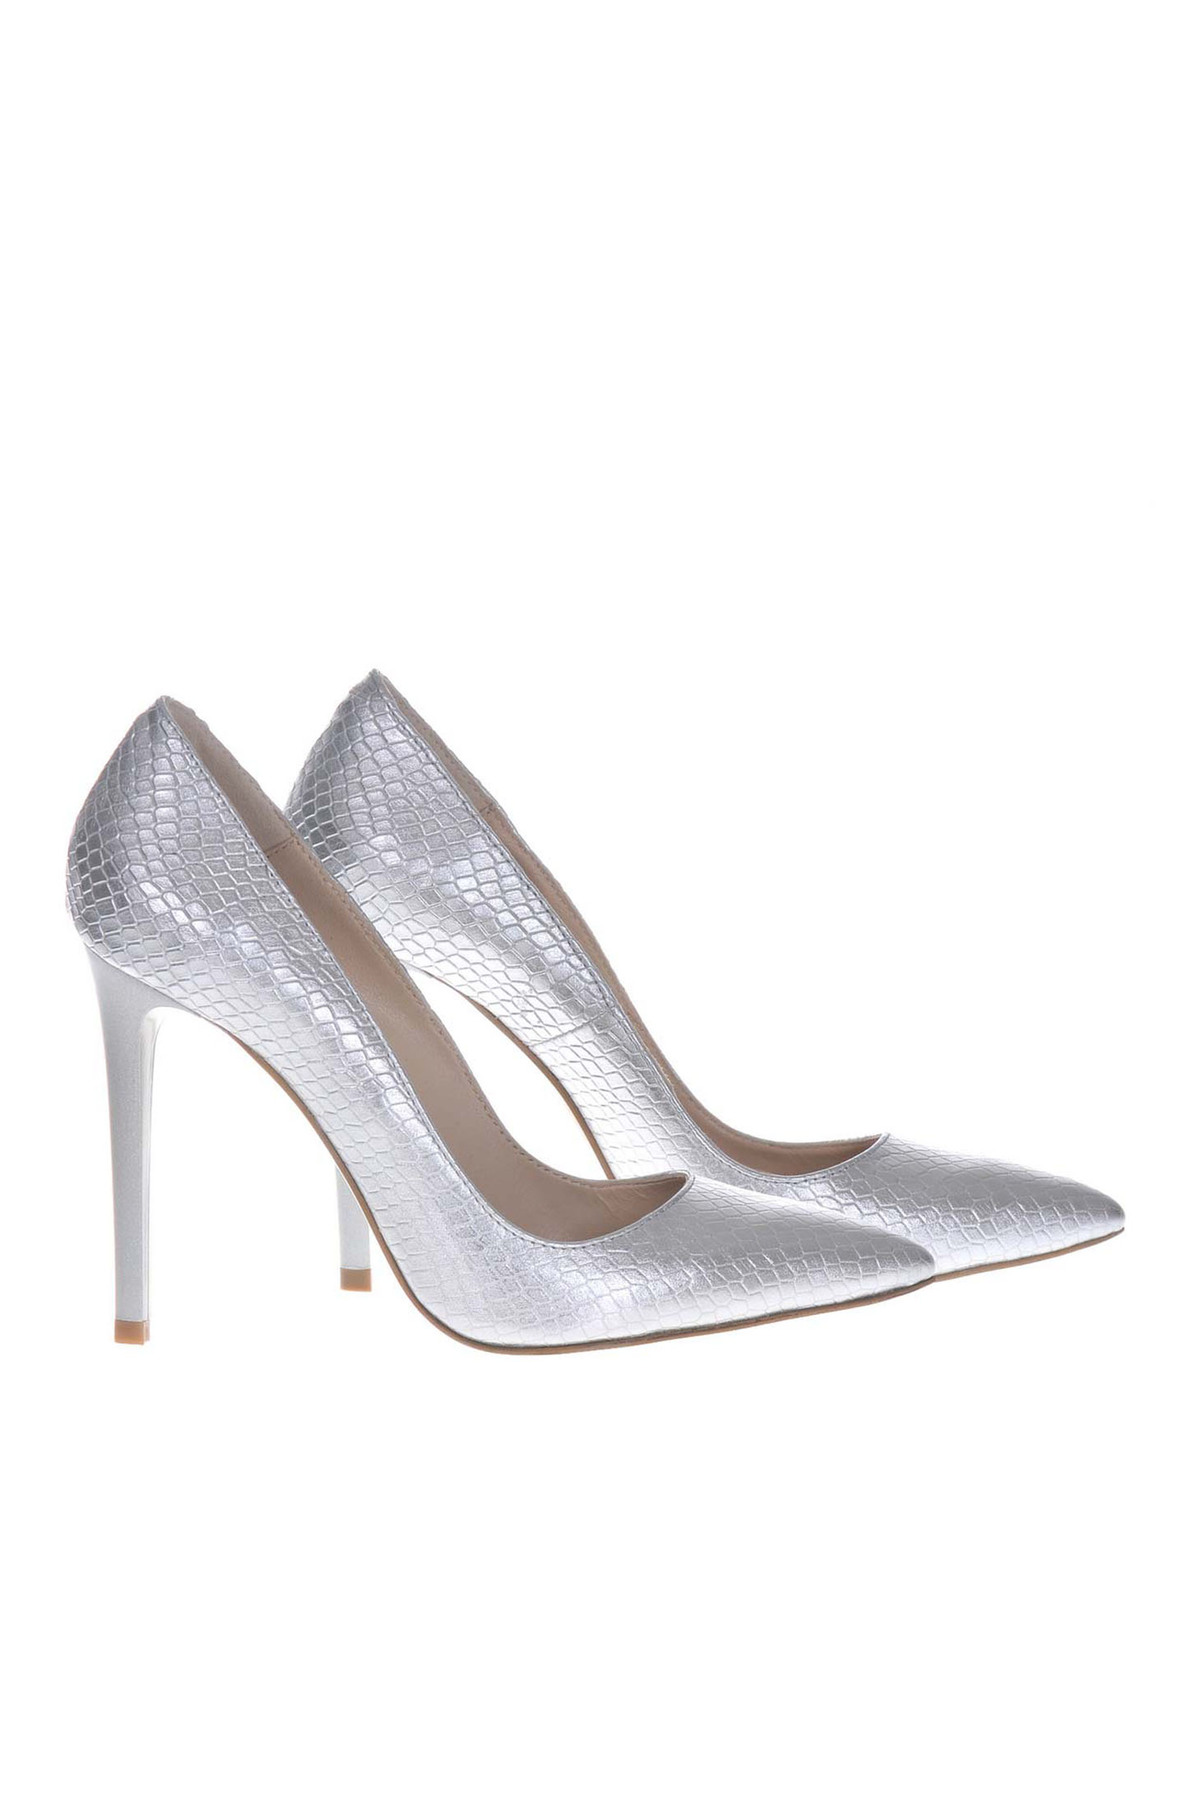 Pantofi stiletto argintii eleganti din piele naturala cu toc inalt